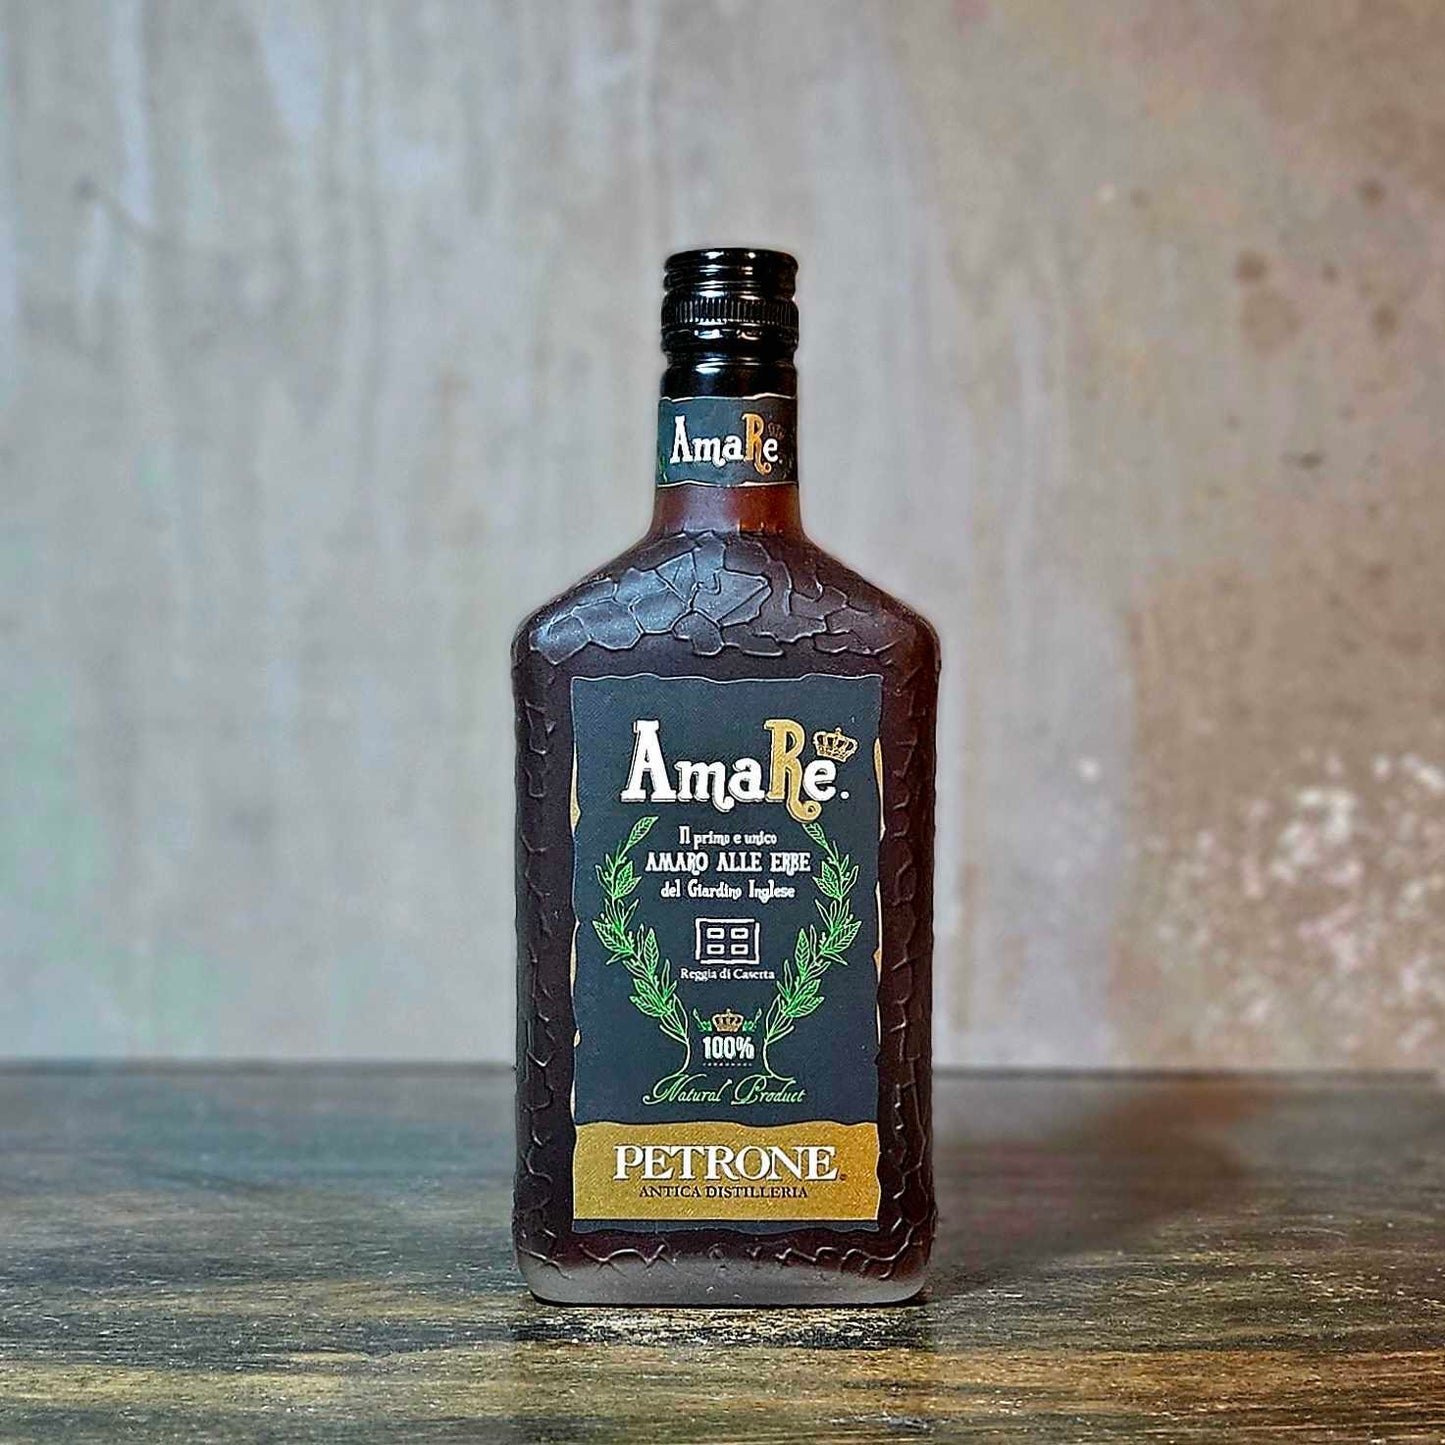 Petrone - 'AmaRe', Amaro, Reggia di Caserta, Italy (NV)